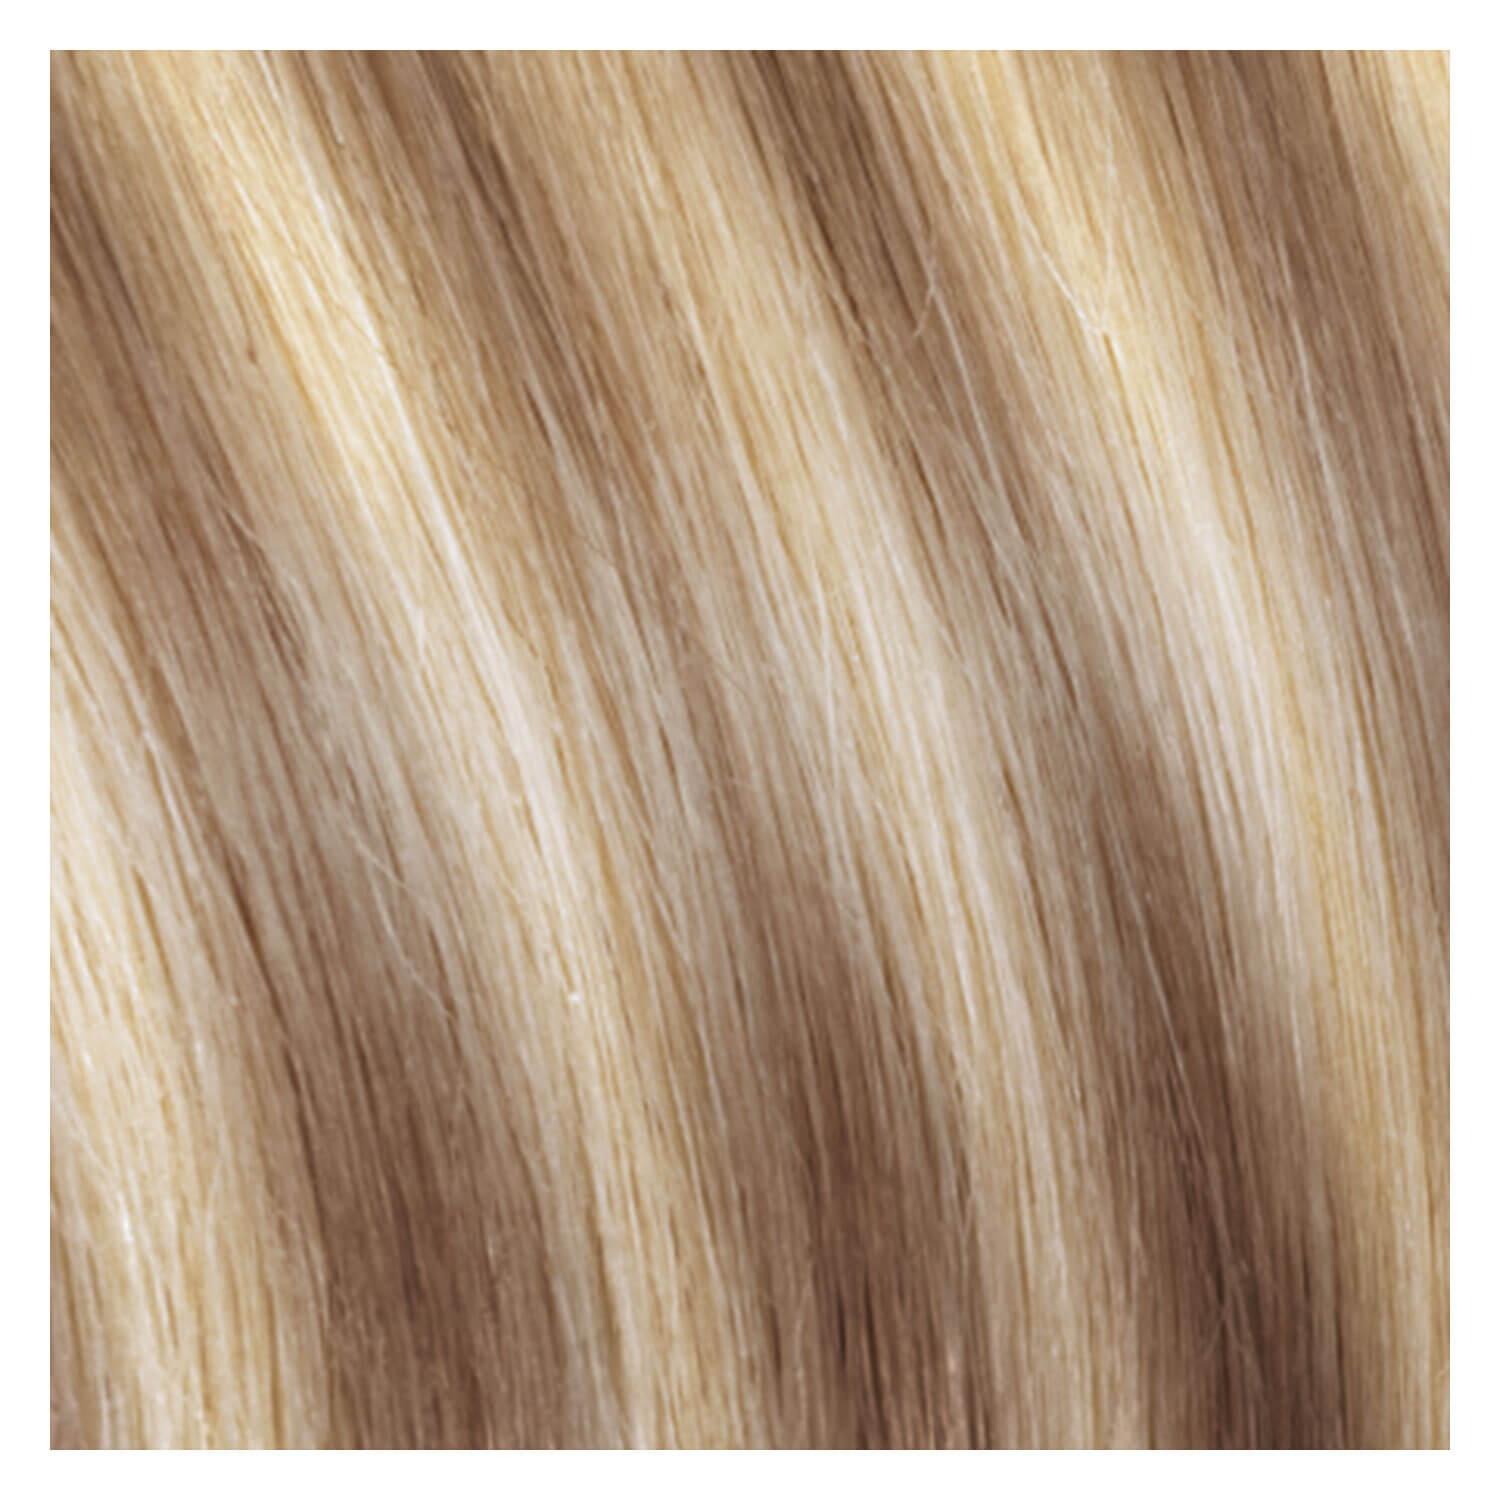 SHE Bonding-System Hair Extensions Straight - M14/1001 Blond Clair Naturel/Blond Platine très Clair 55/60cm